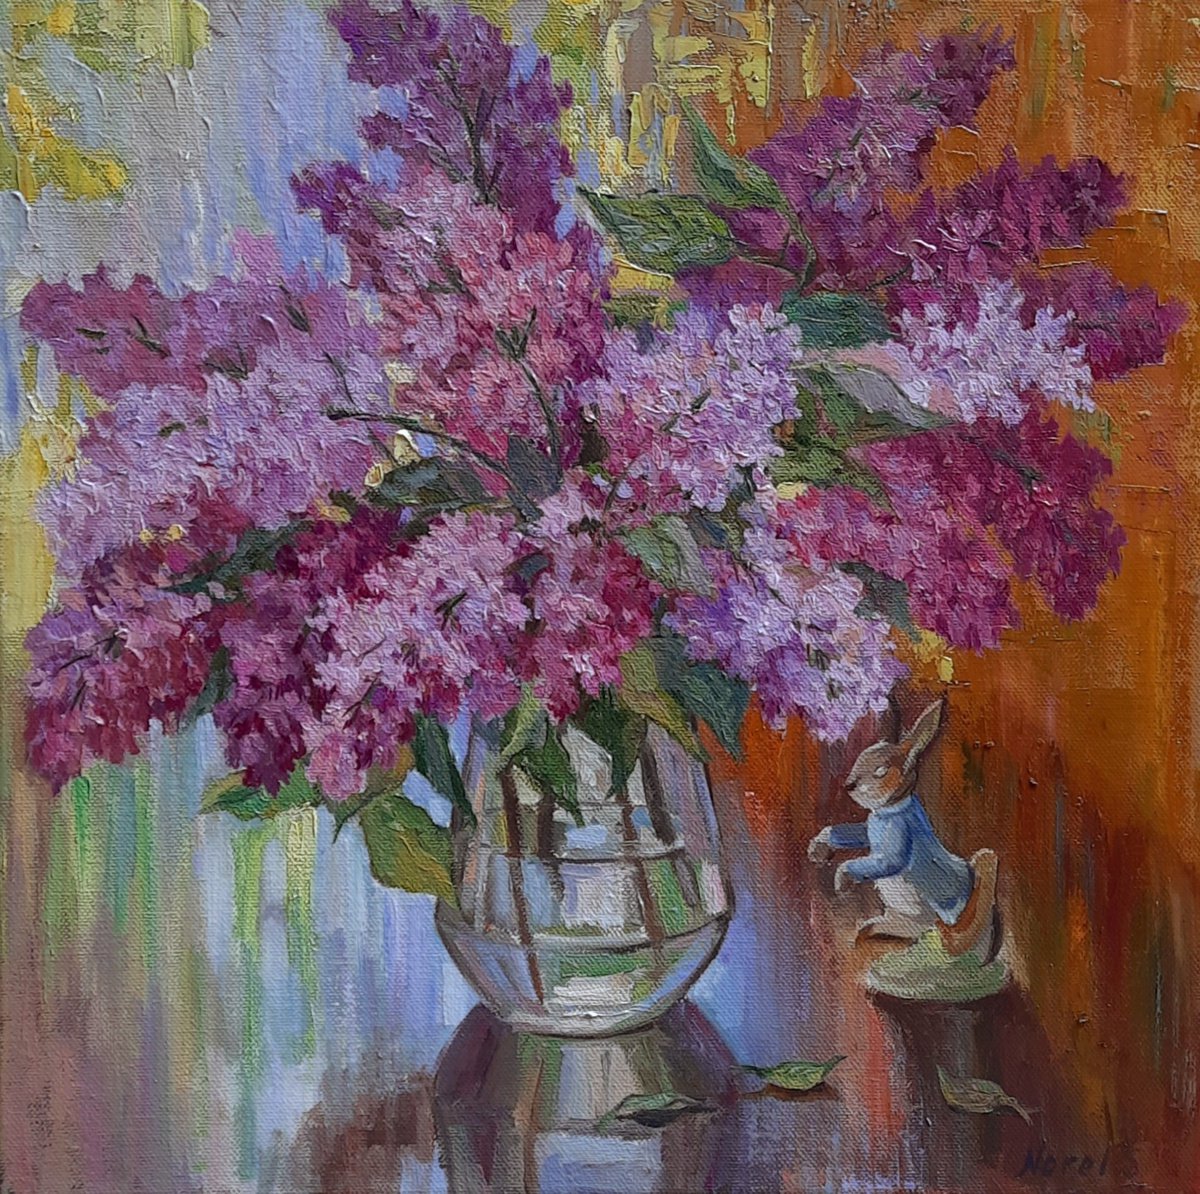 Still life with lilac by Svetlana Norel